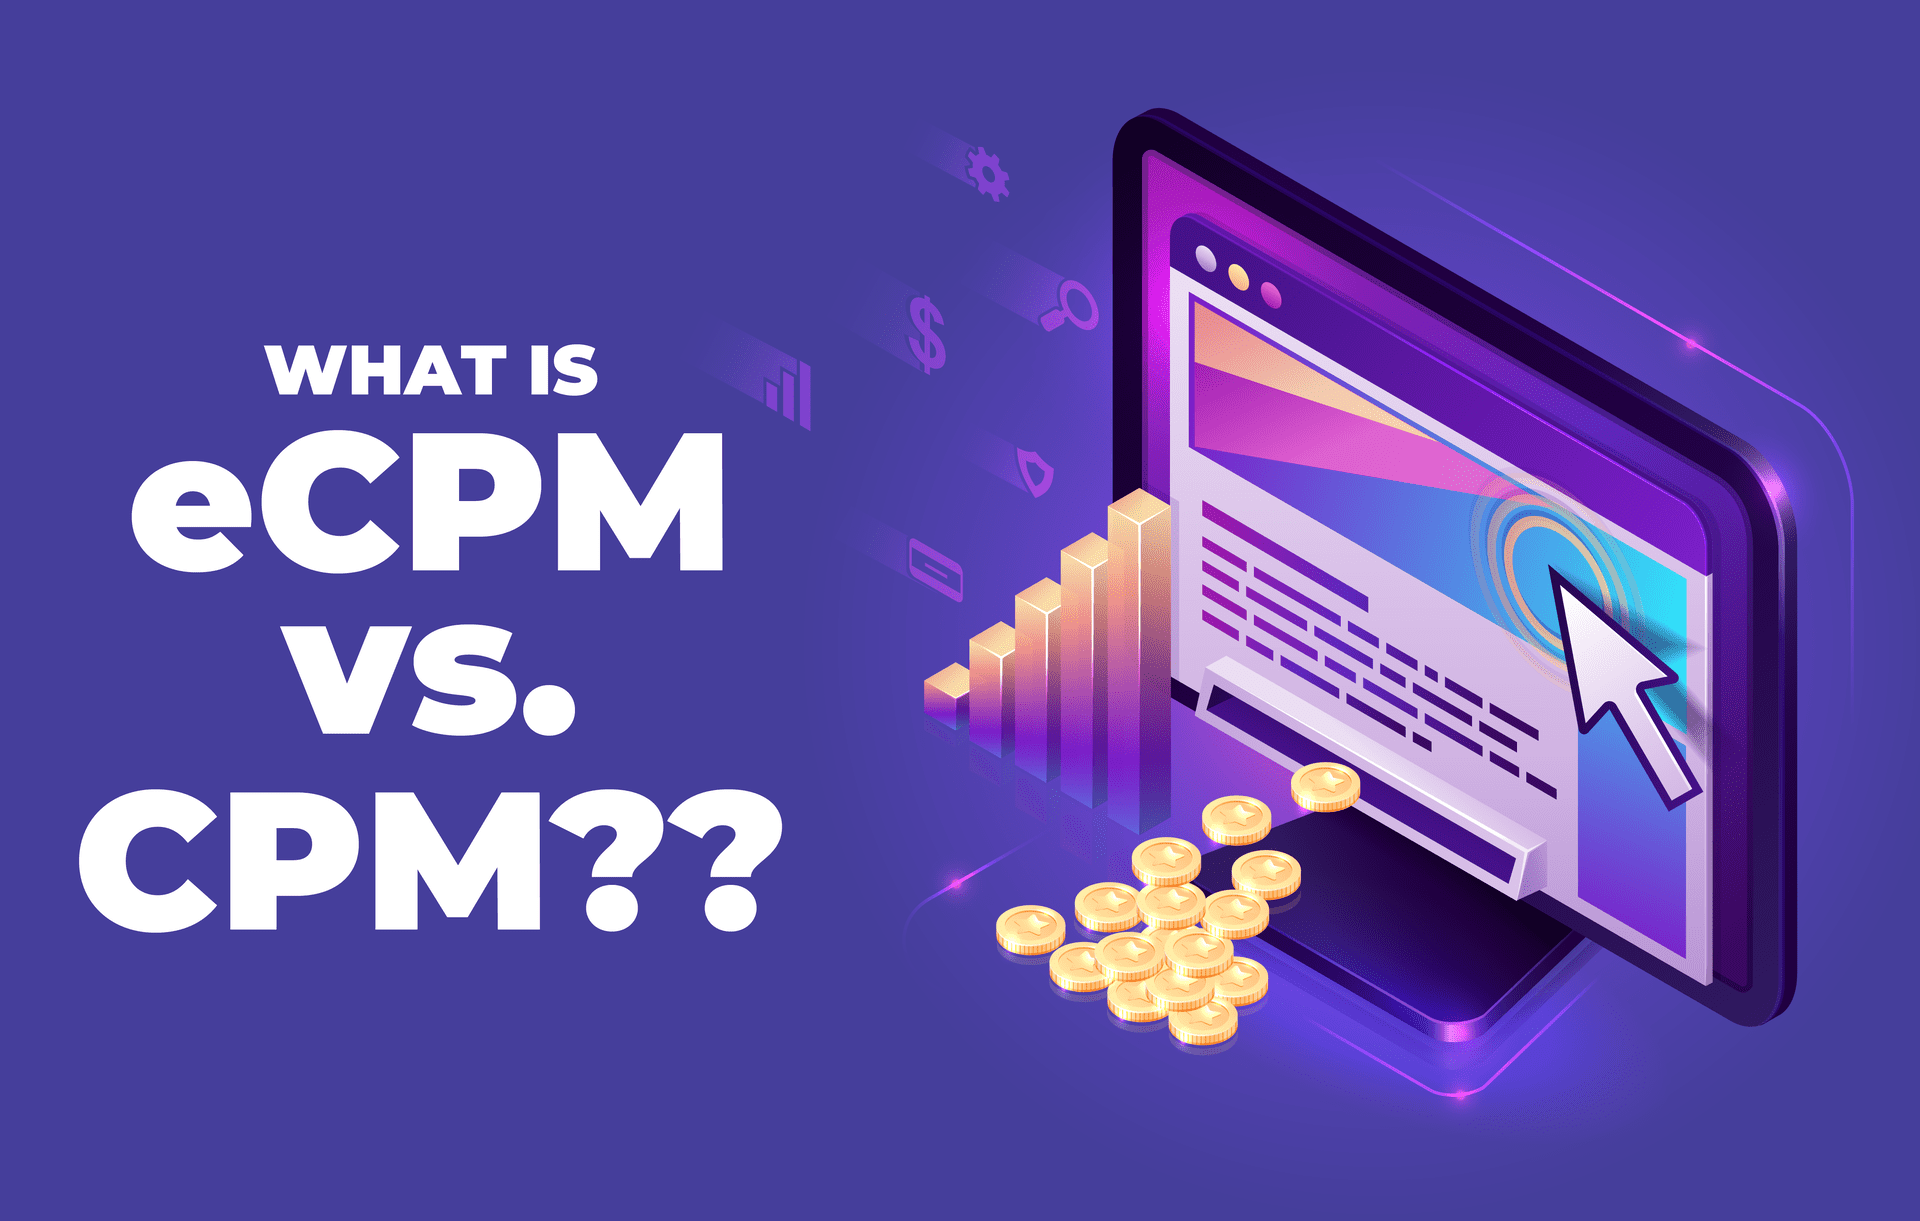 What is eCPM vs CPM?